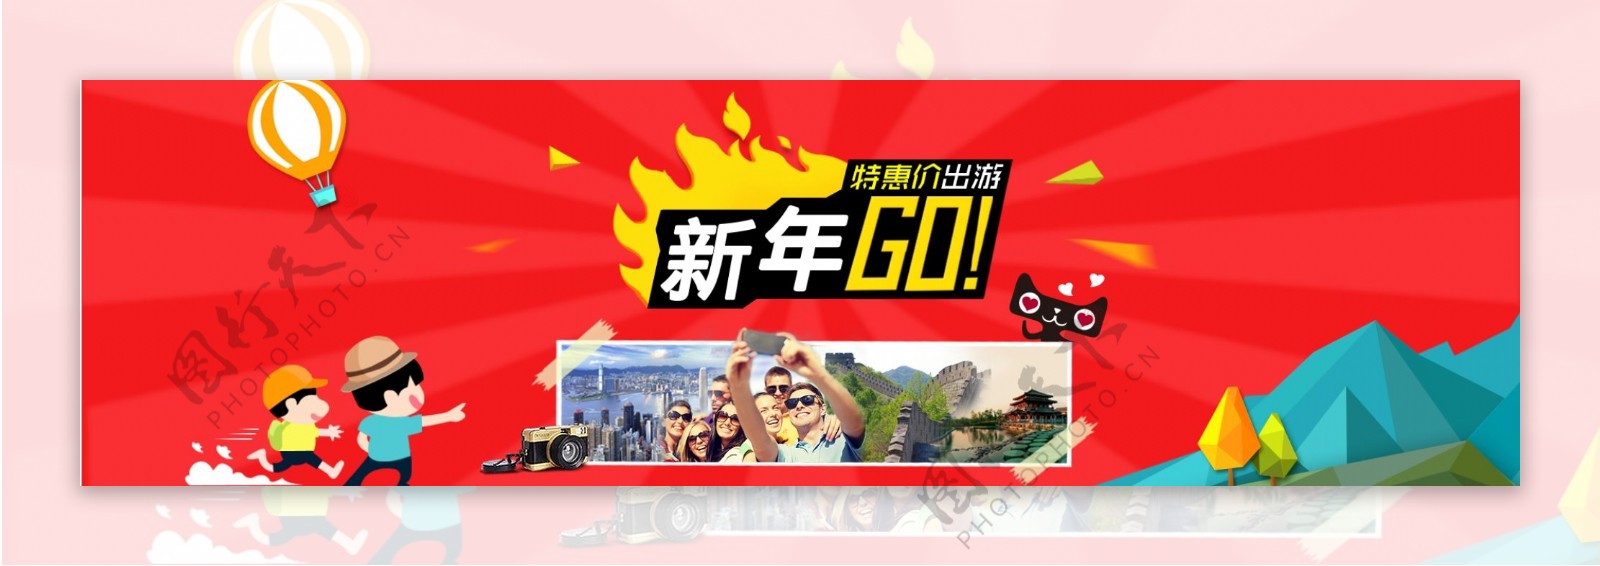 旅游新年海报banner